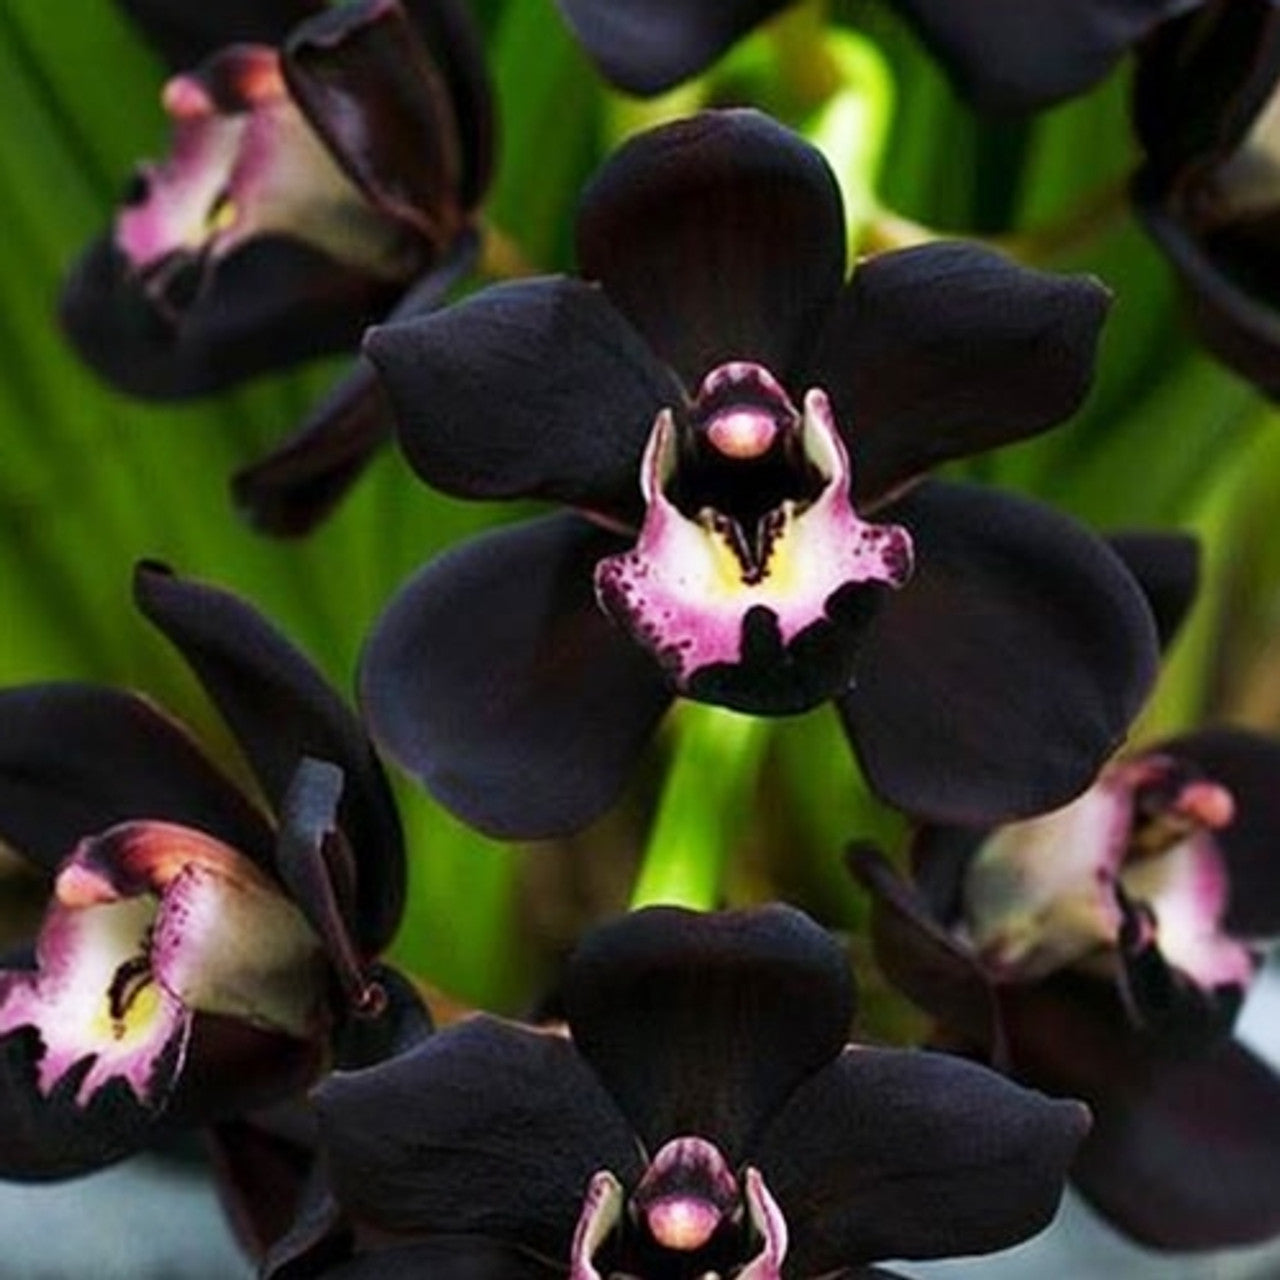 TF Black Orchid 50g Snap Bar